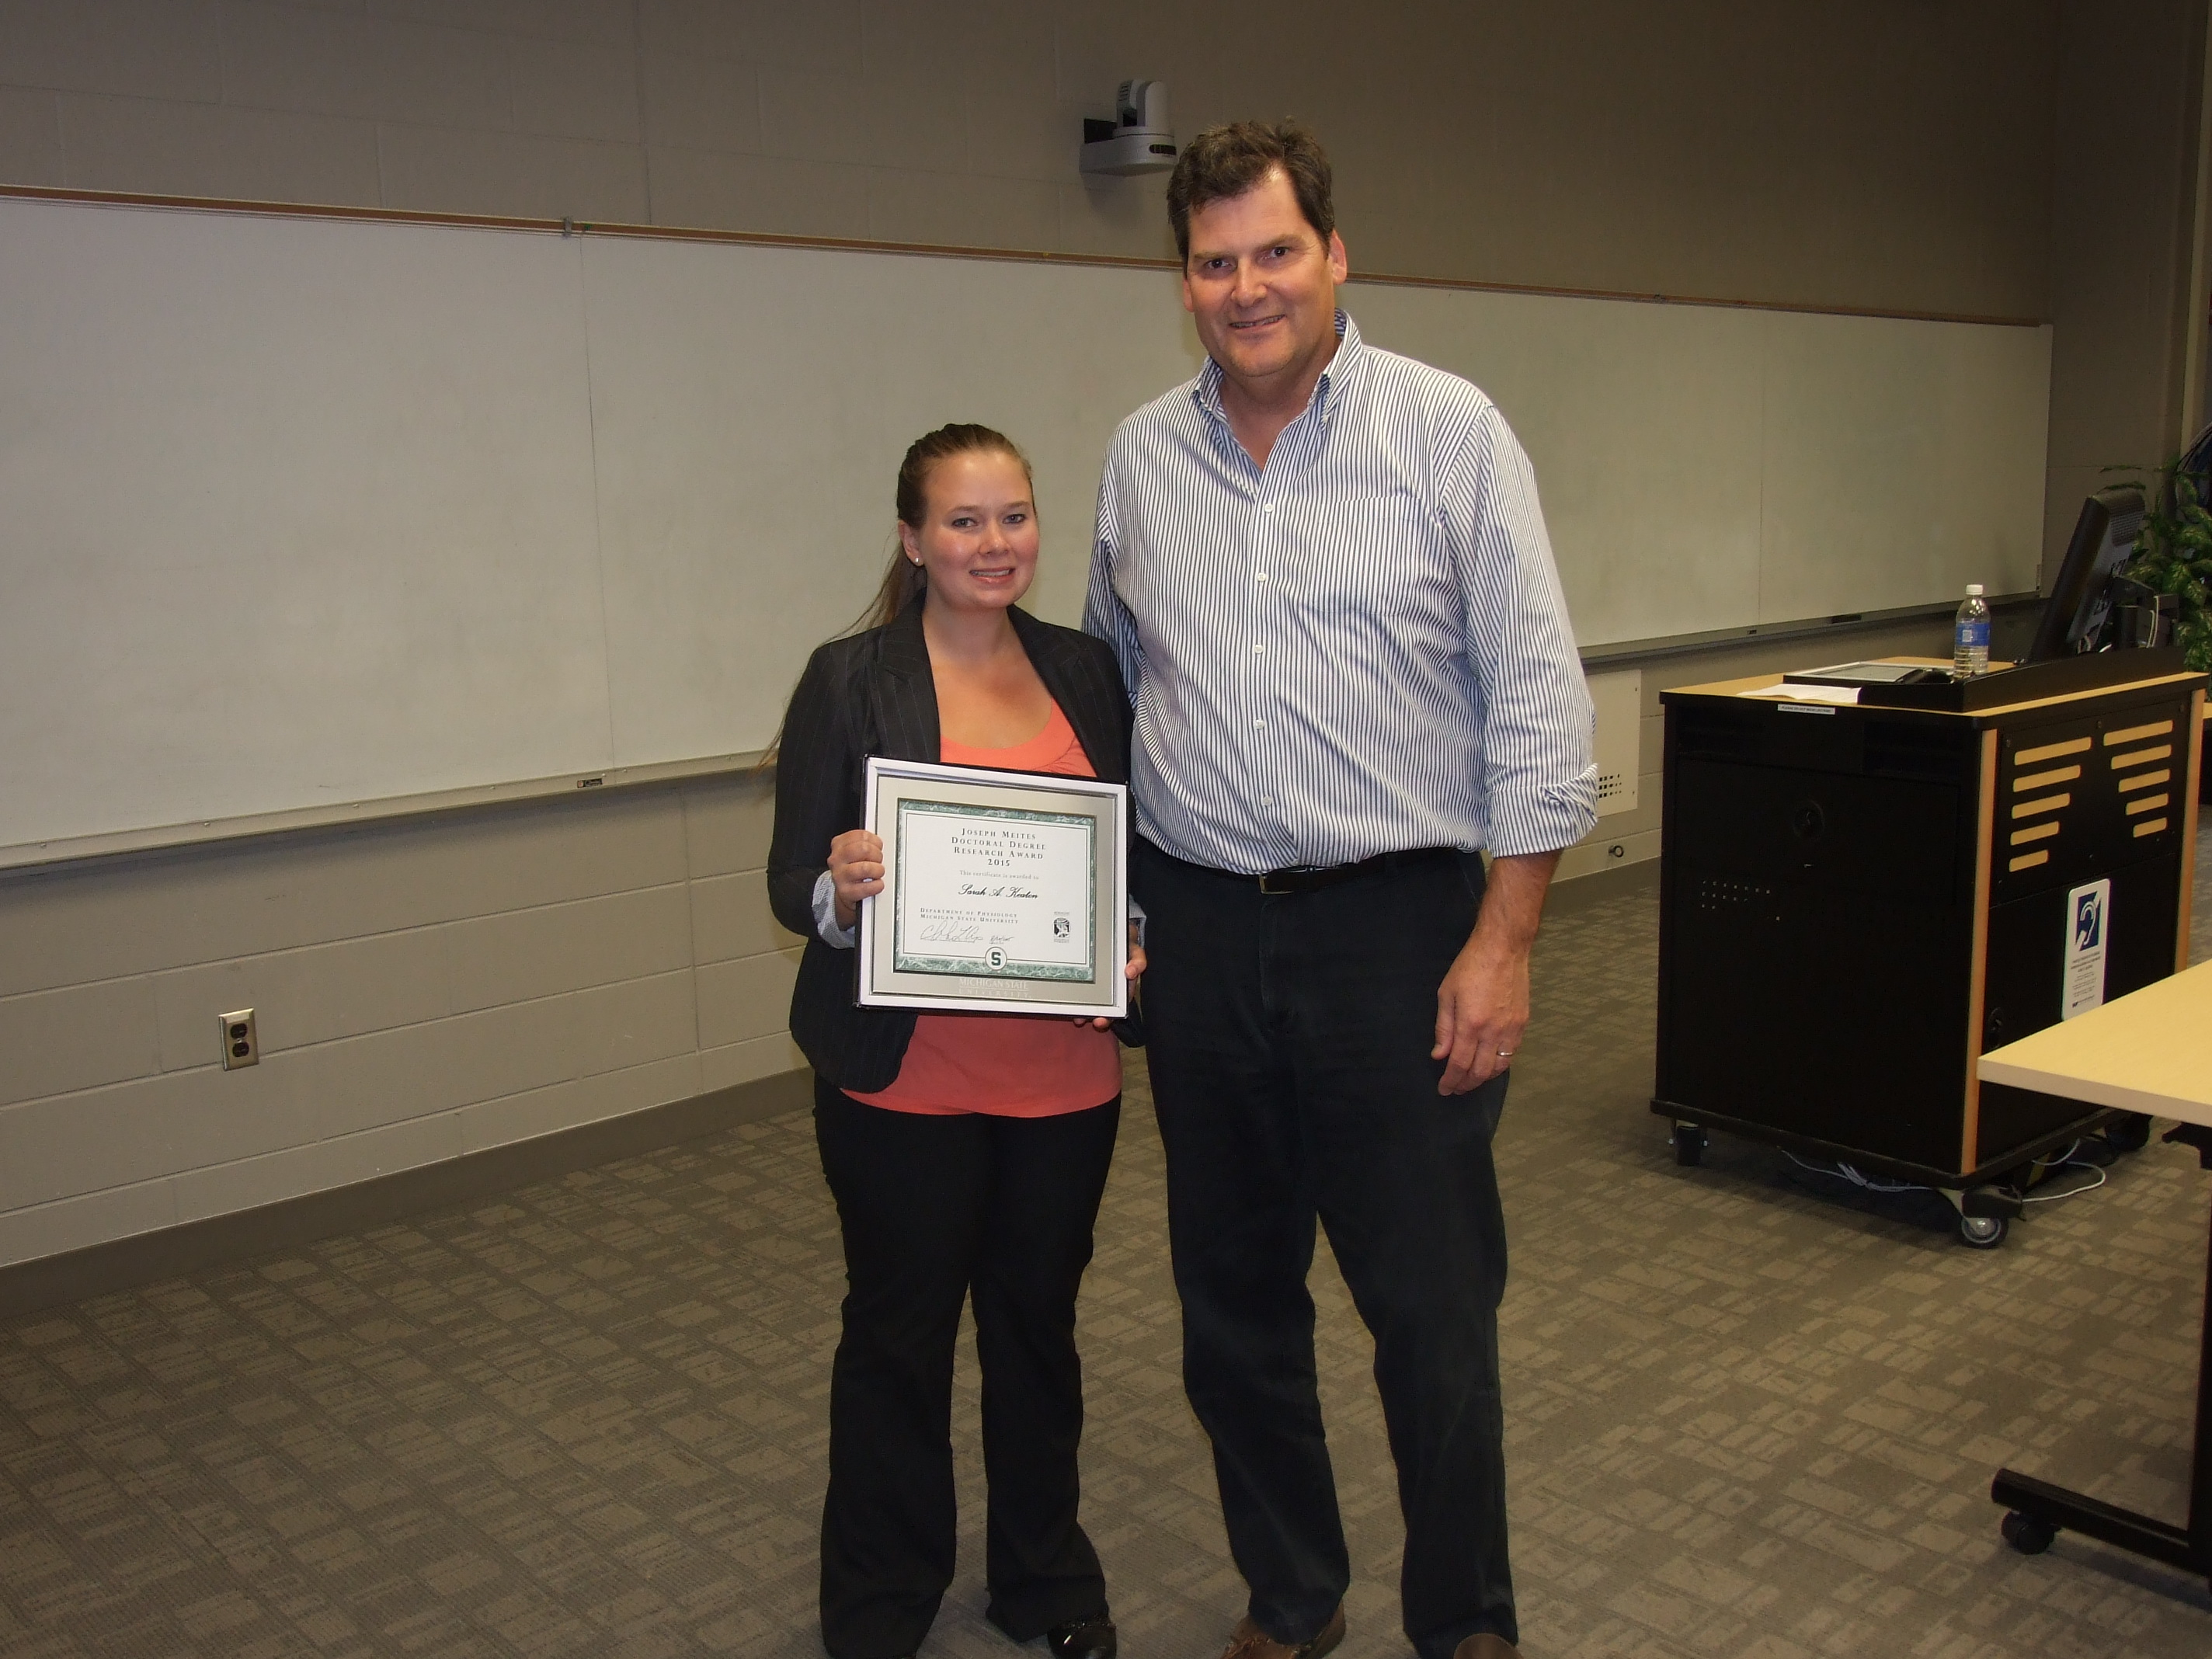 Sarah Keaton receiving an award from Dr. C. Lee Cox